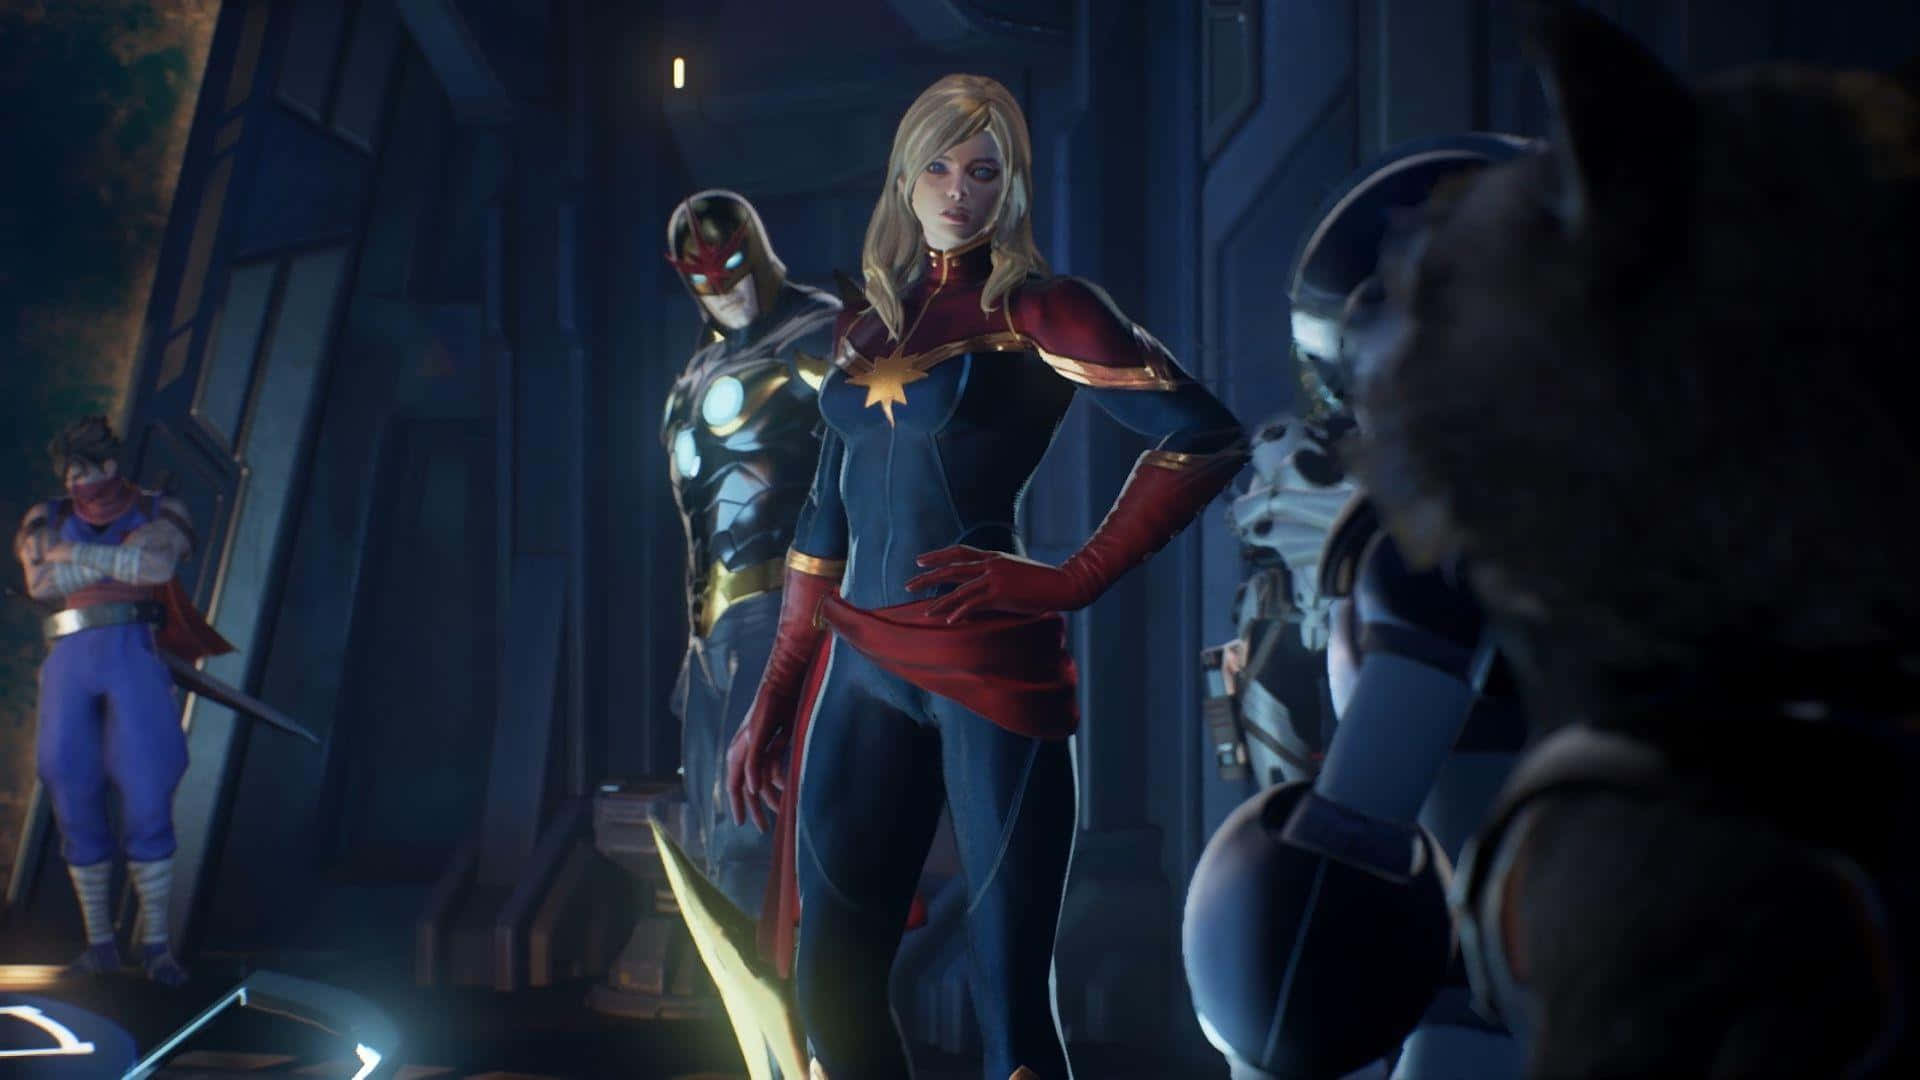 Brie Larson Stars As Captain Marvel In The Epic Marvel Studios Movie.